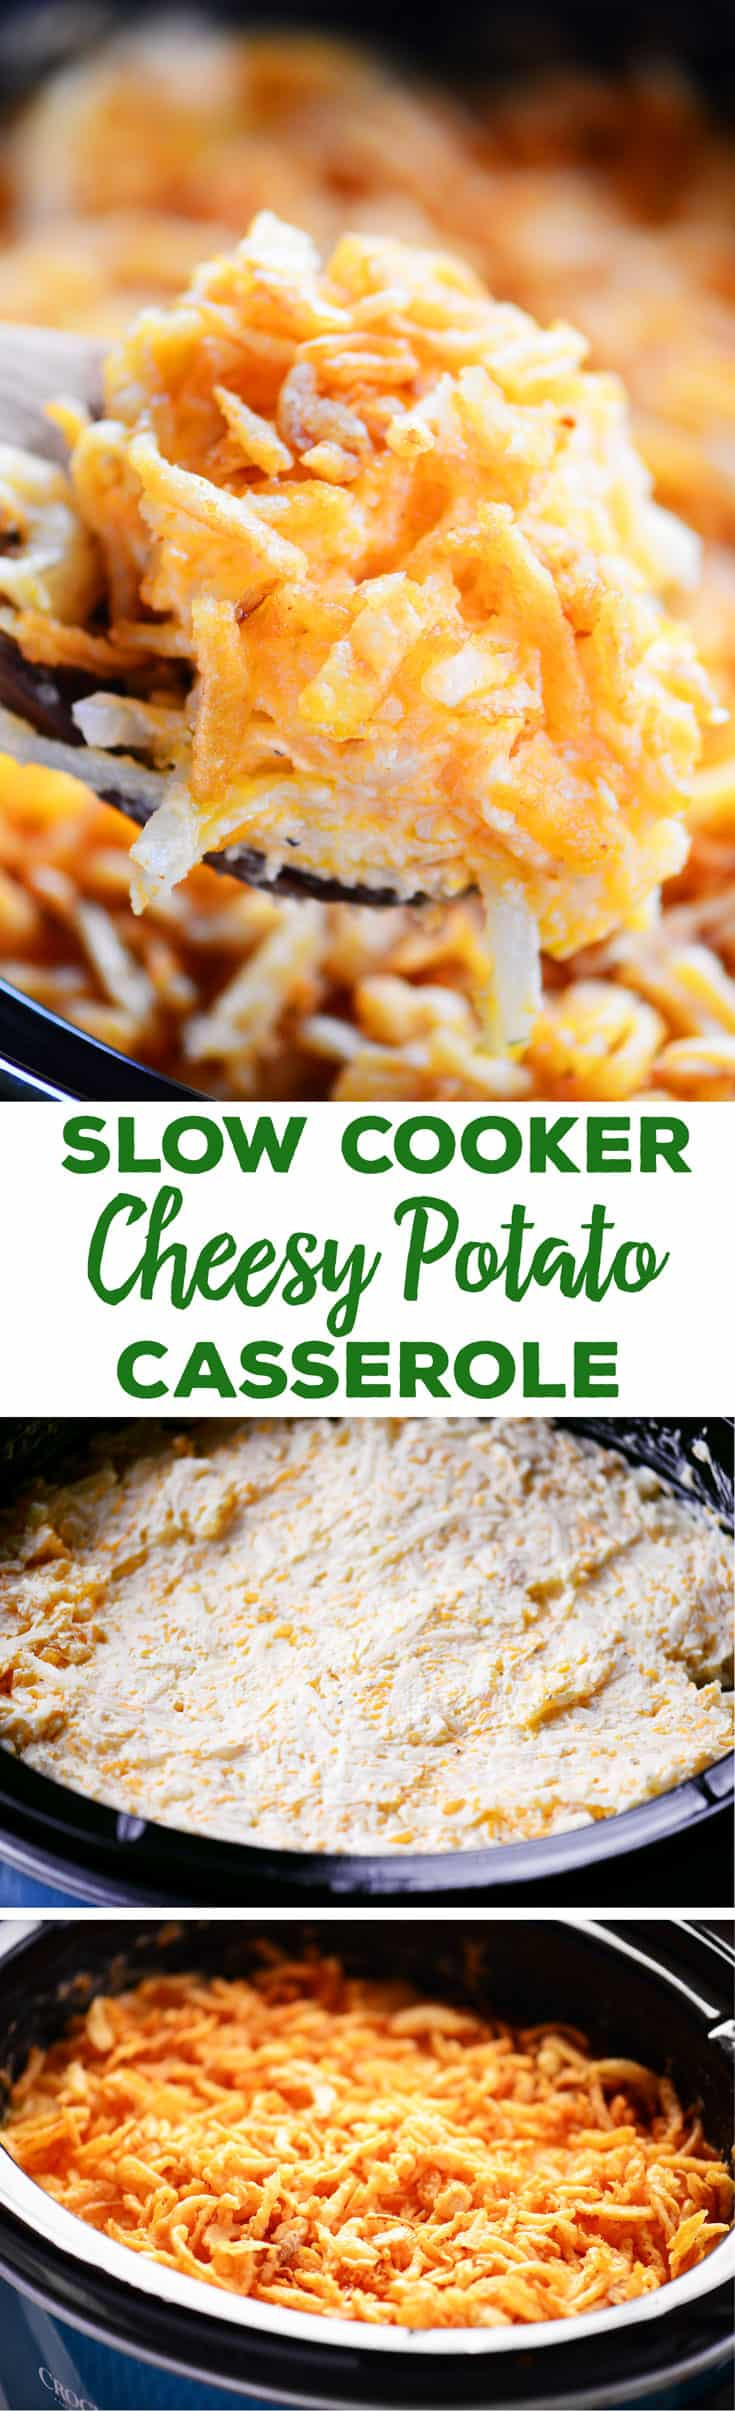 Cheesy Potato Casserole Recipe
 Slow Cooker Cheesy Potato Casserole The Gunny Sack